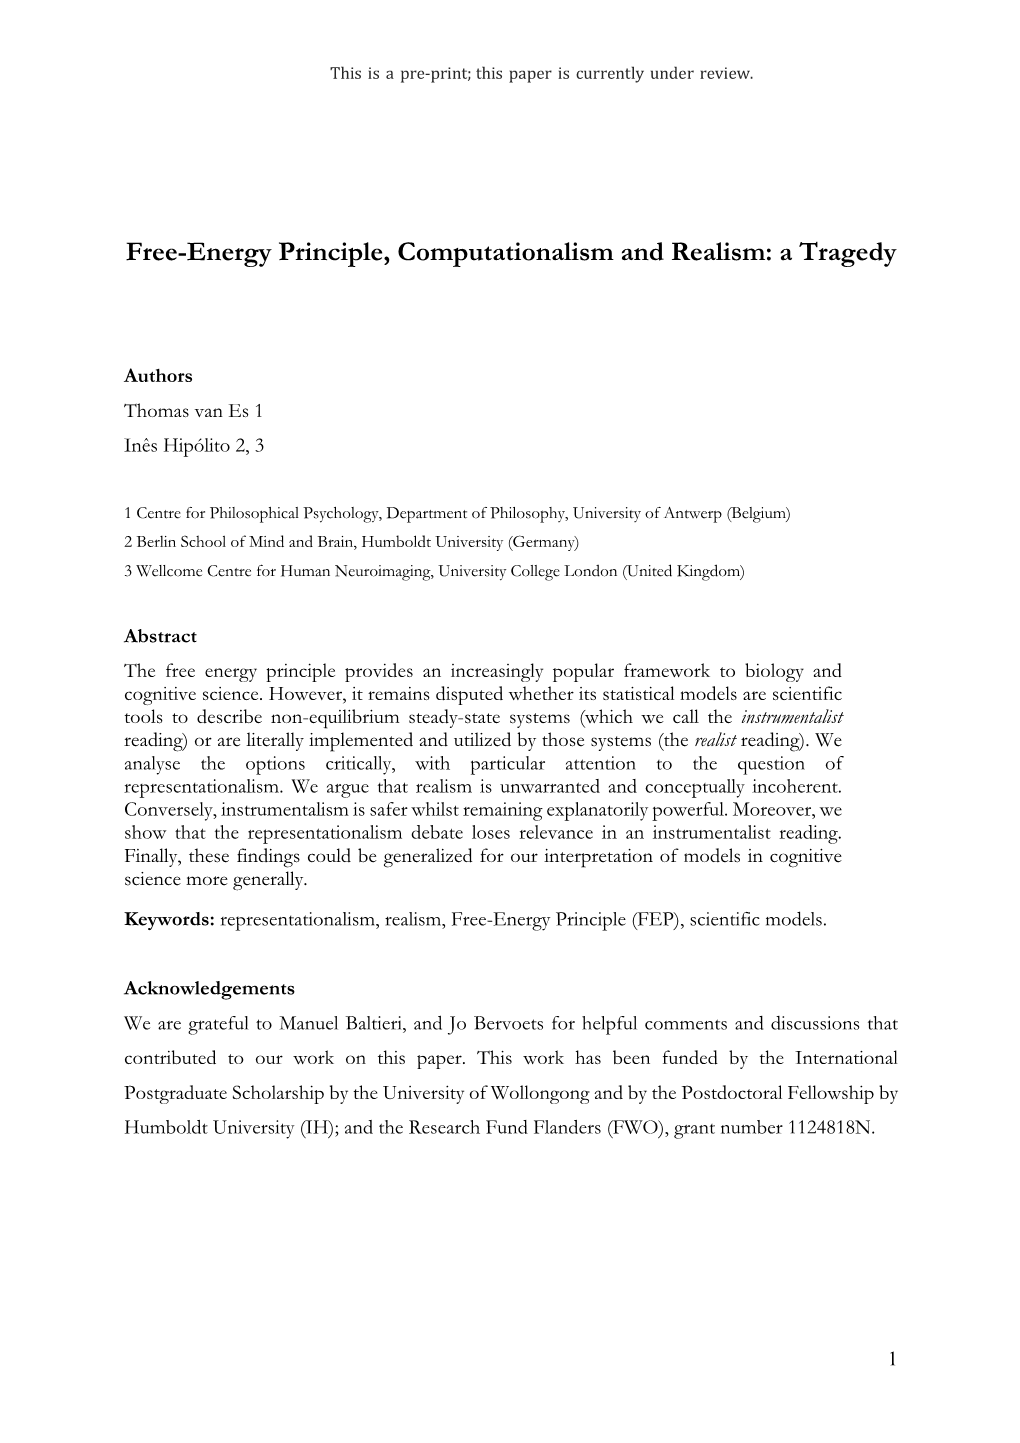 Free-Energy Principle, Computationalism and Realism: a Tragedy